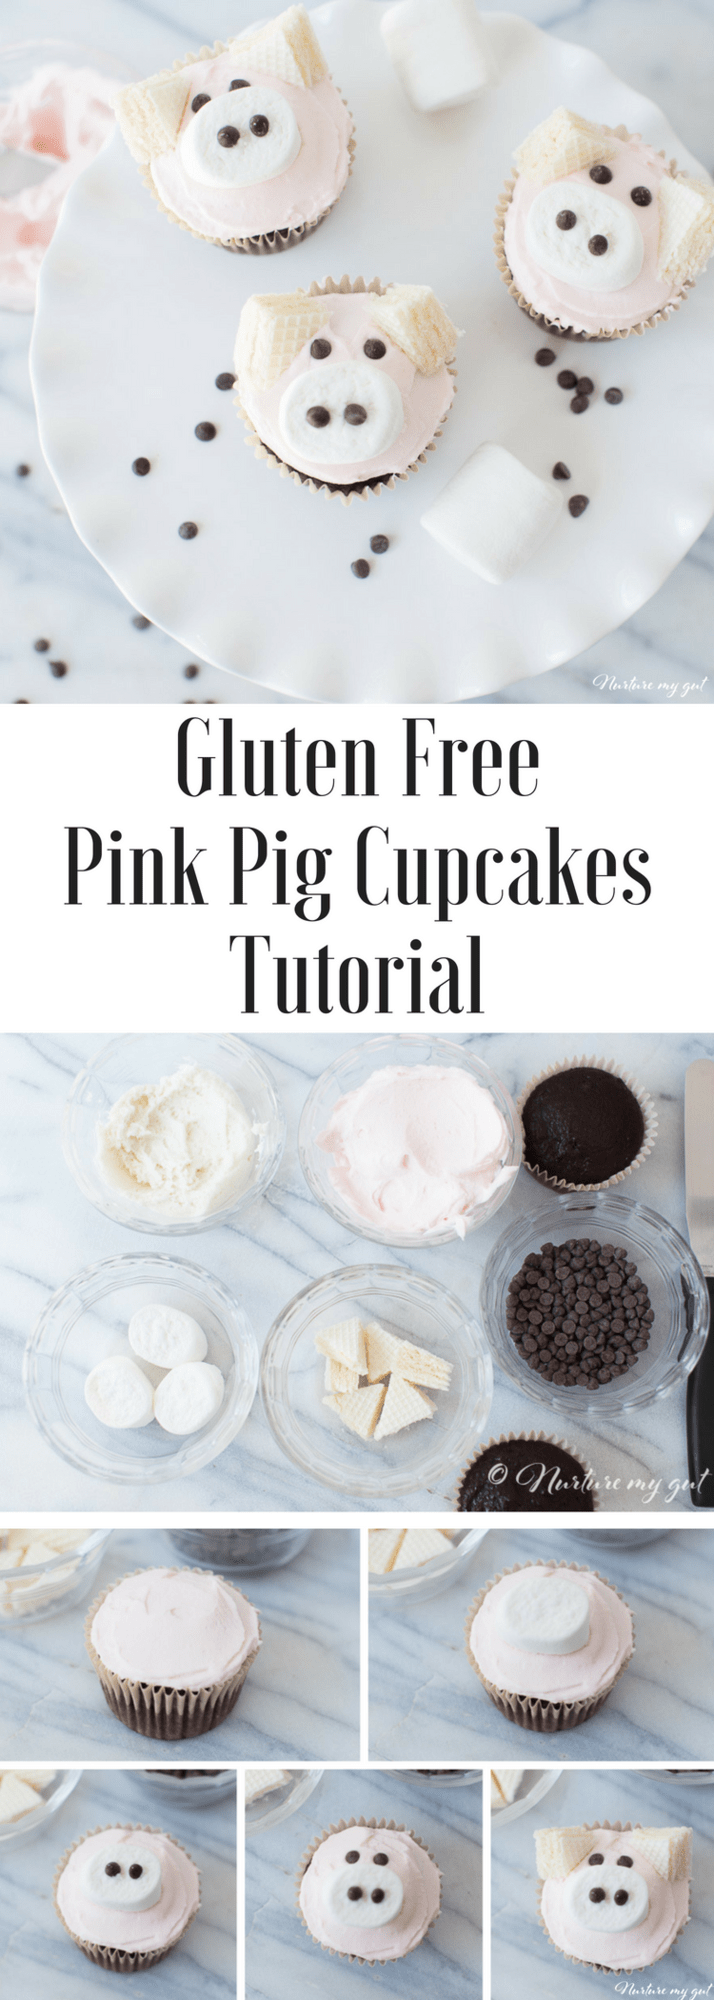 Gluten Free Pink Pig Cupcakes